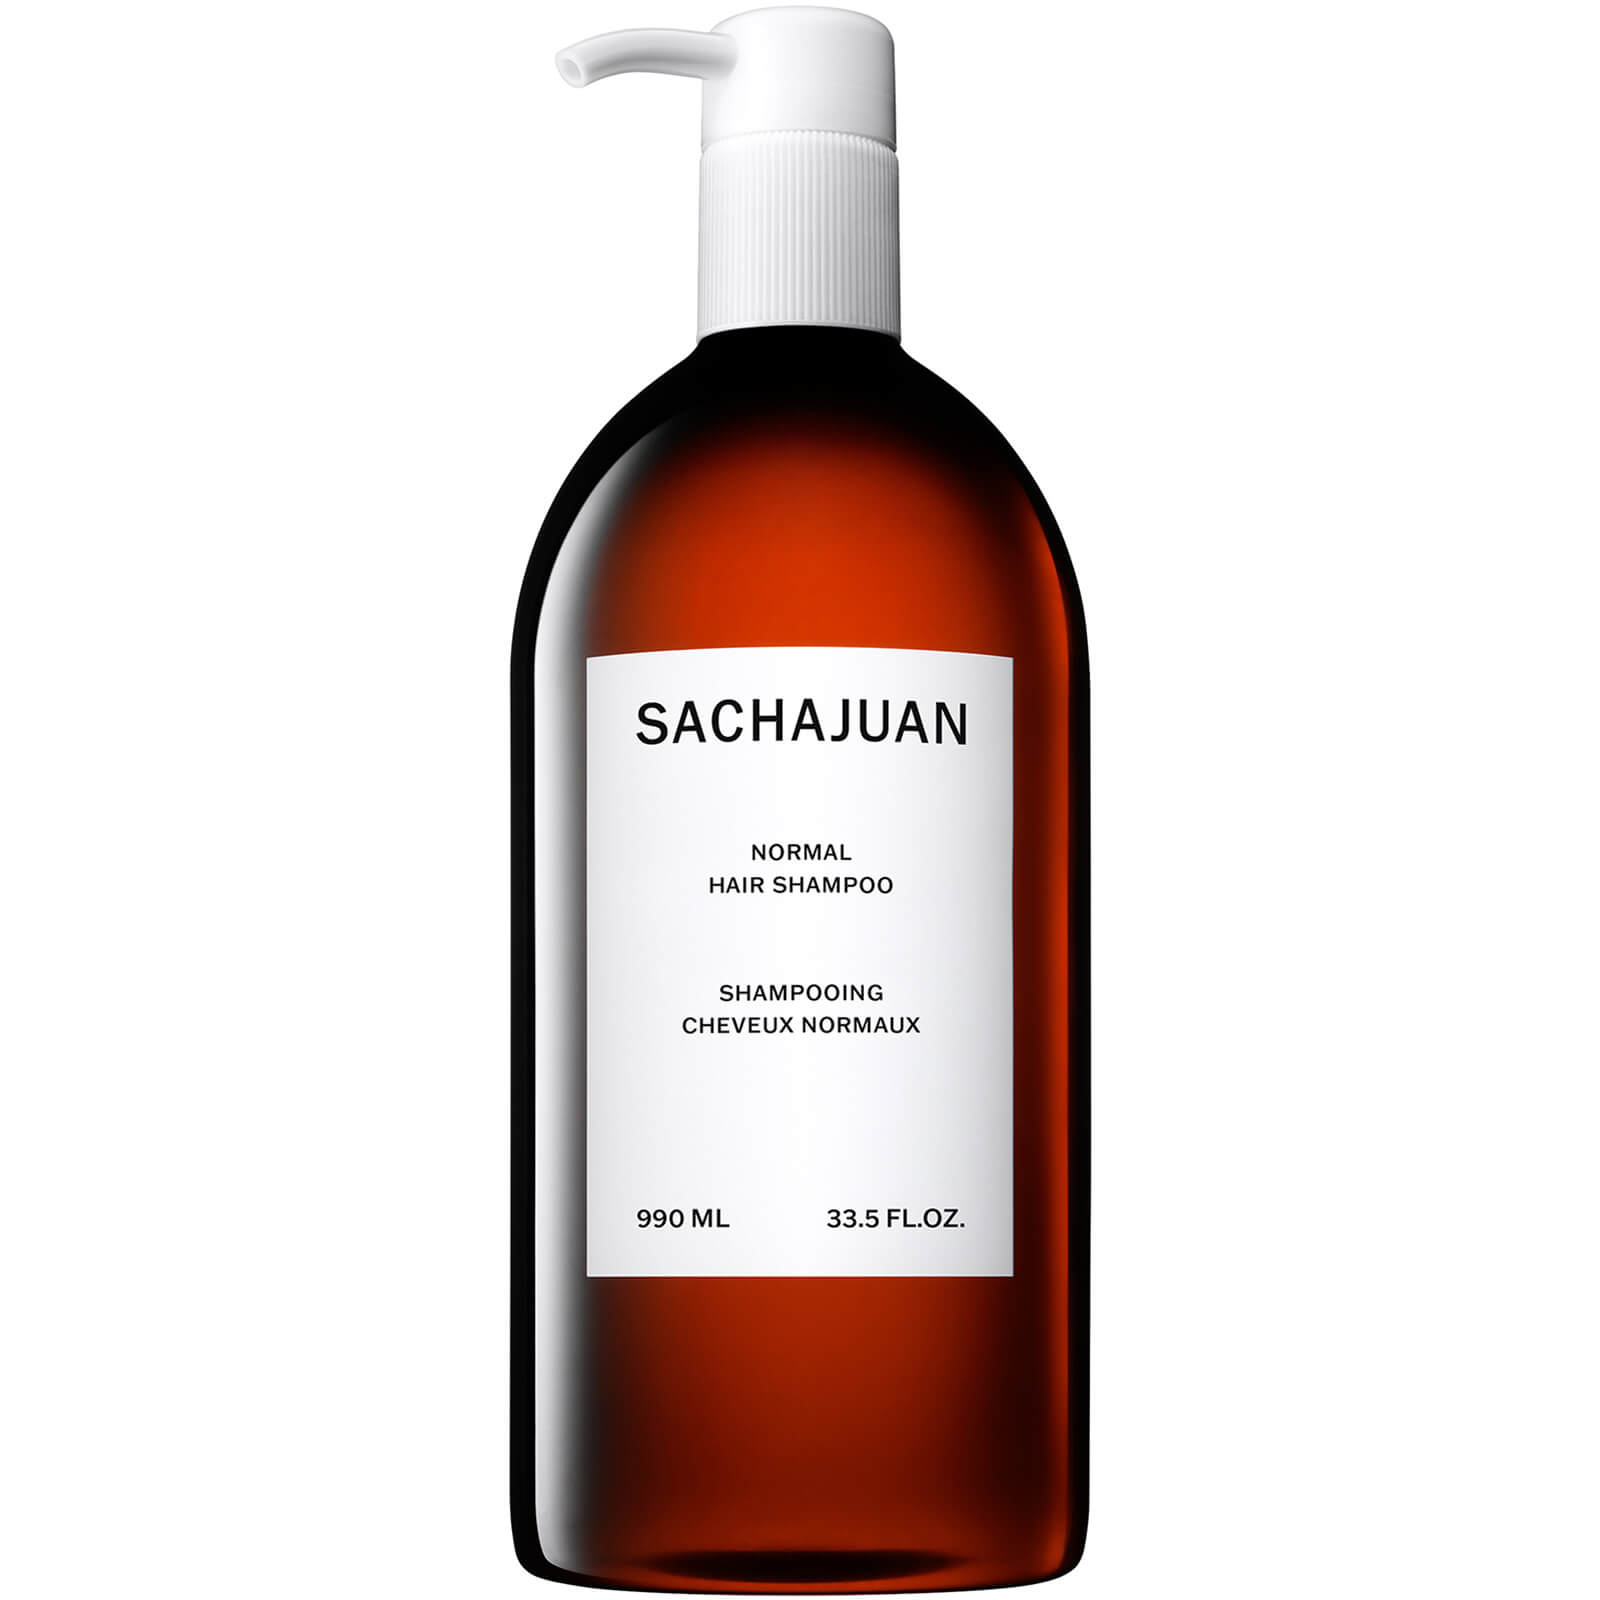 Sachajuan Normal Shampoo 990ml product